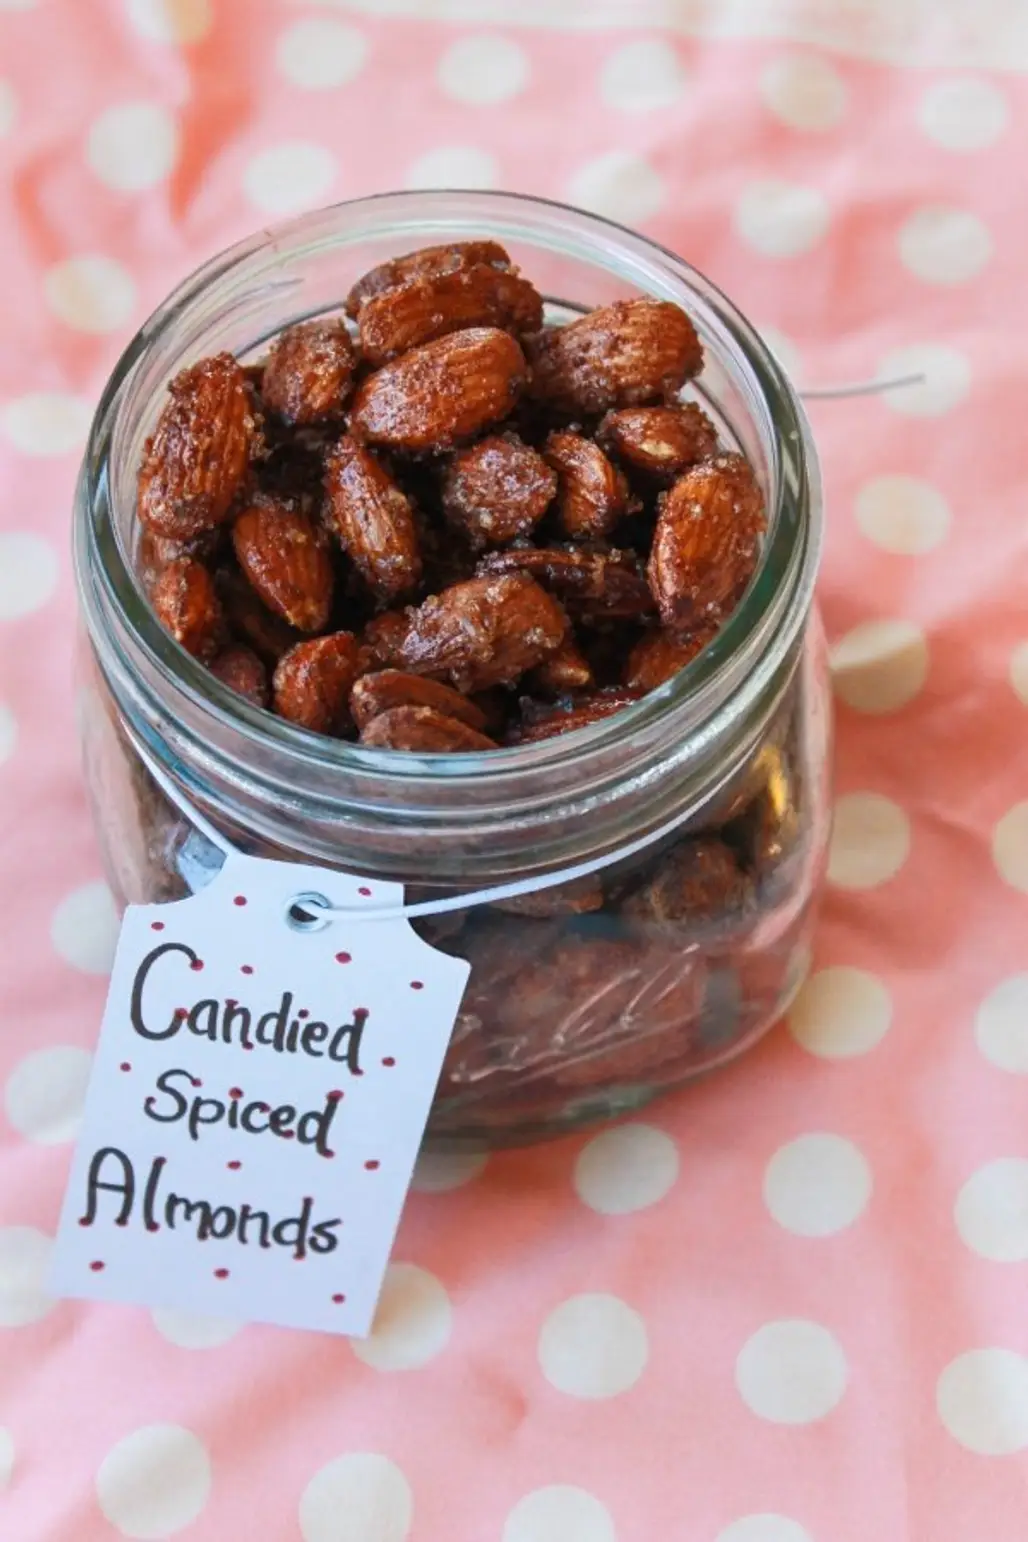 Spiced Almonds